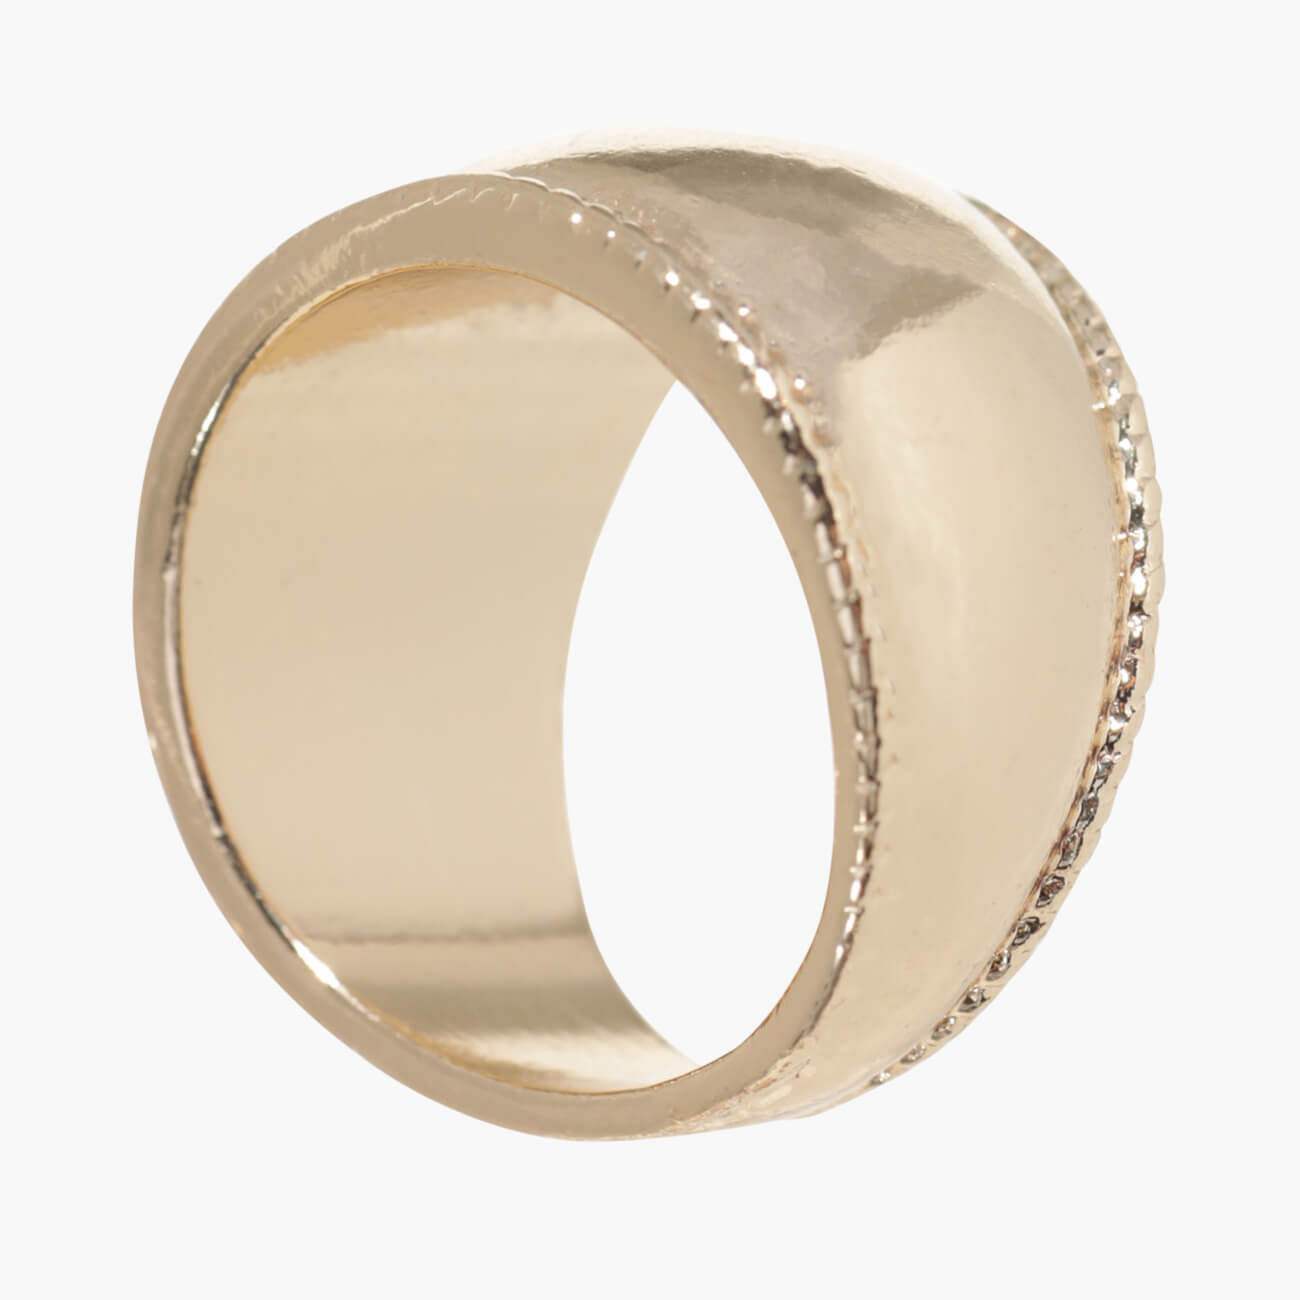 Кольцо, p. S-M, единый размер, металл, золотистое, Jewelry кольцо для салфеток 6 см металл золотистое ветка с листьями print